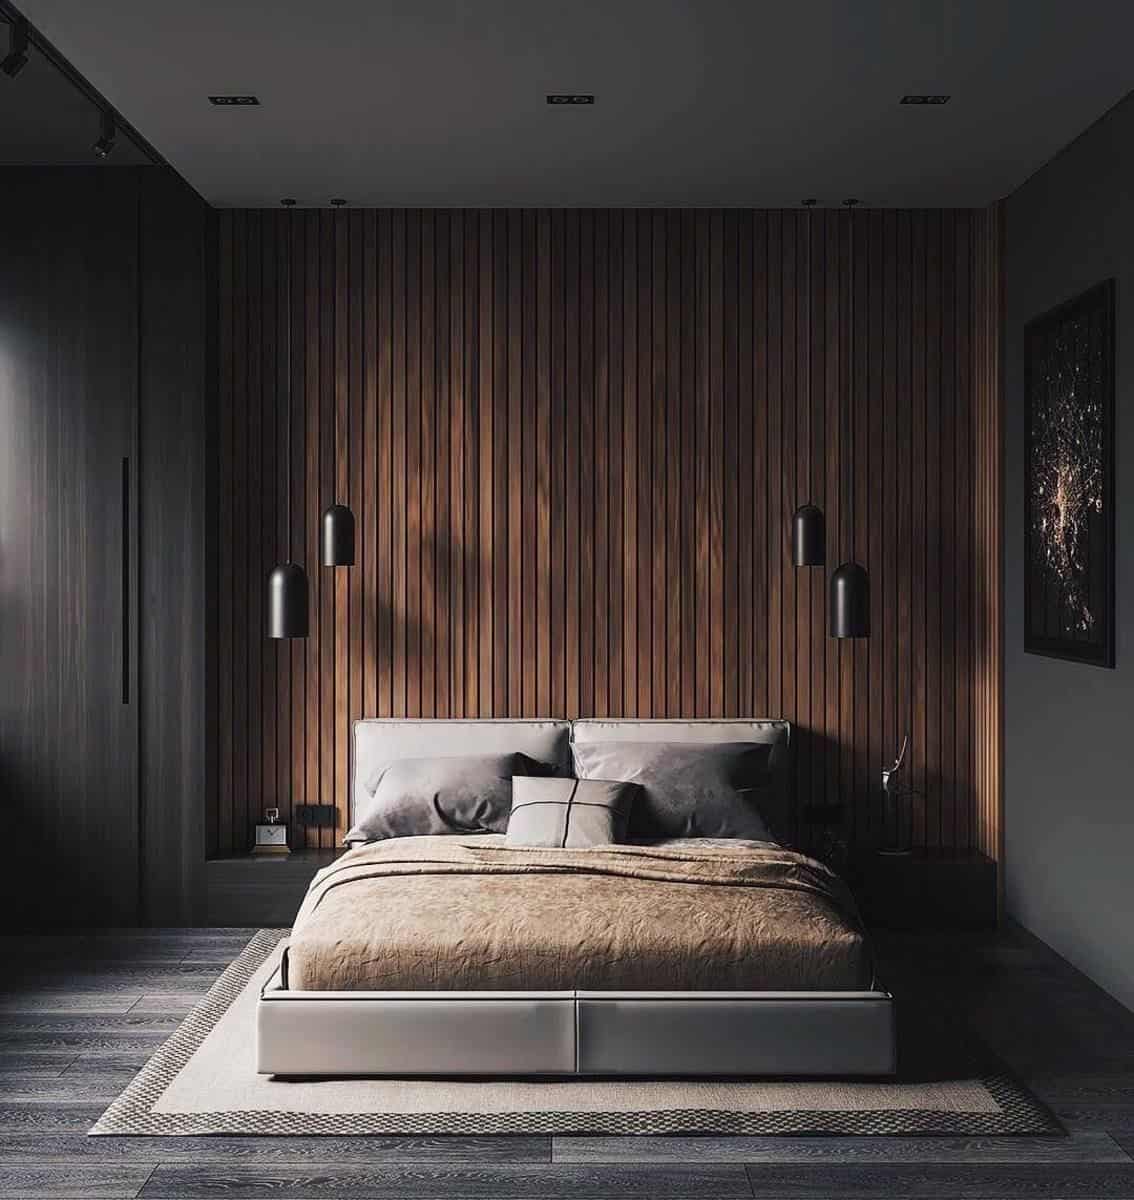  bedroom wall tiles